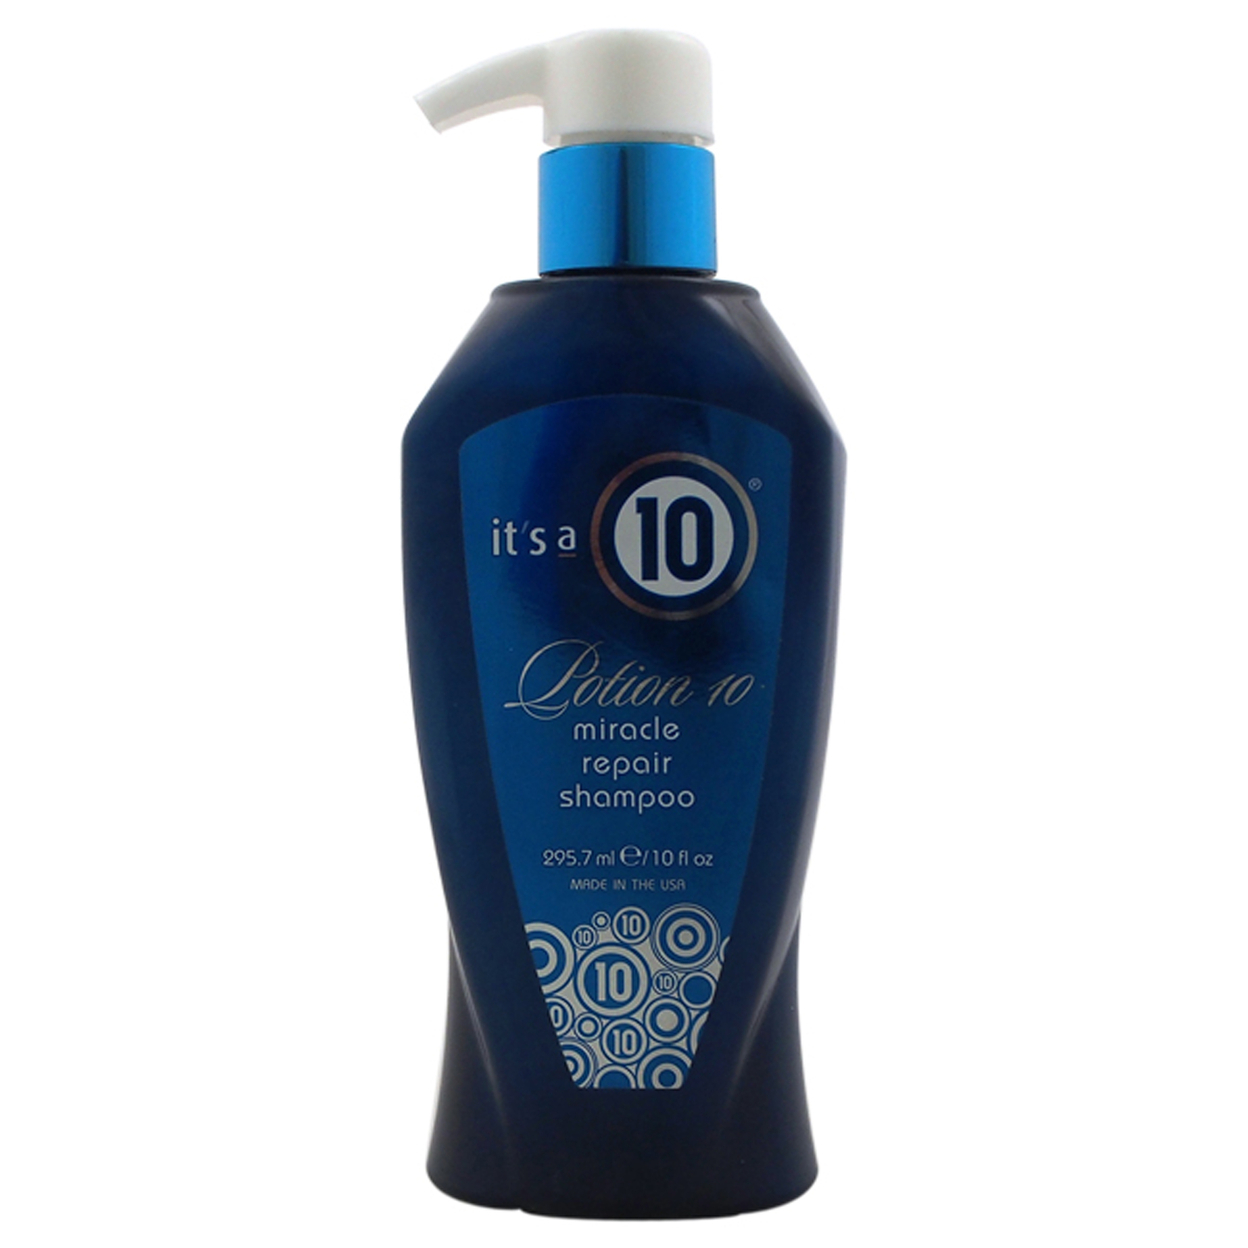 It's A 10 Unisex HAIRCARE Potion 10 Miracle Repair Shampoo 10 Oz